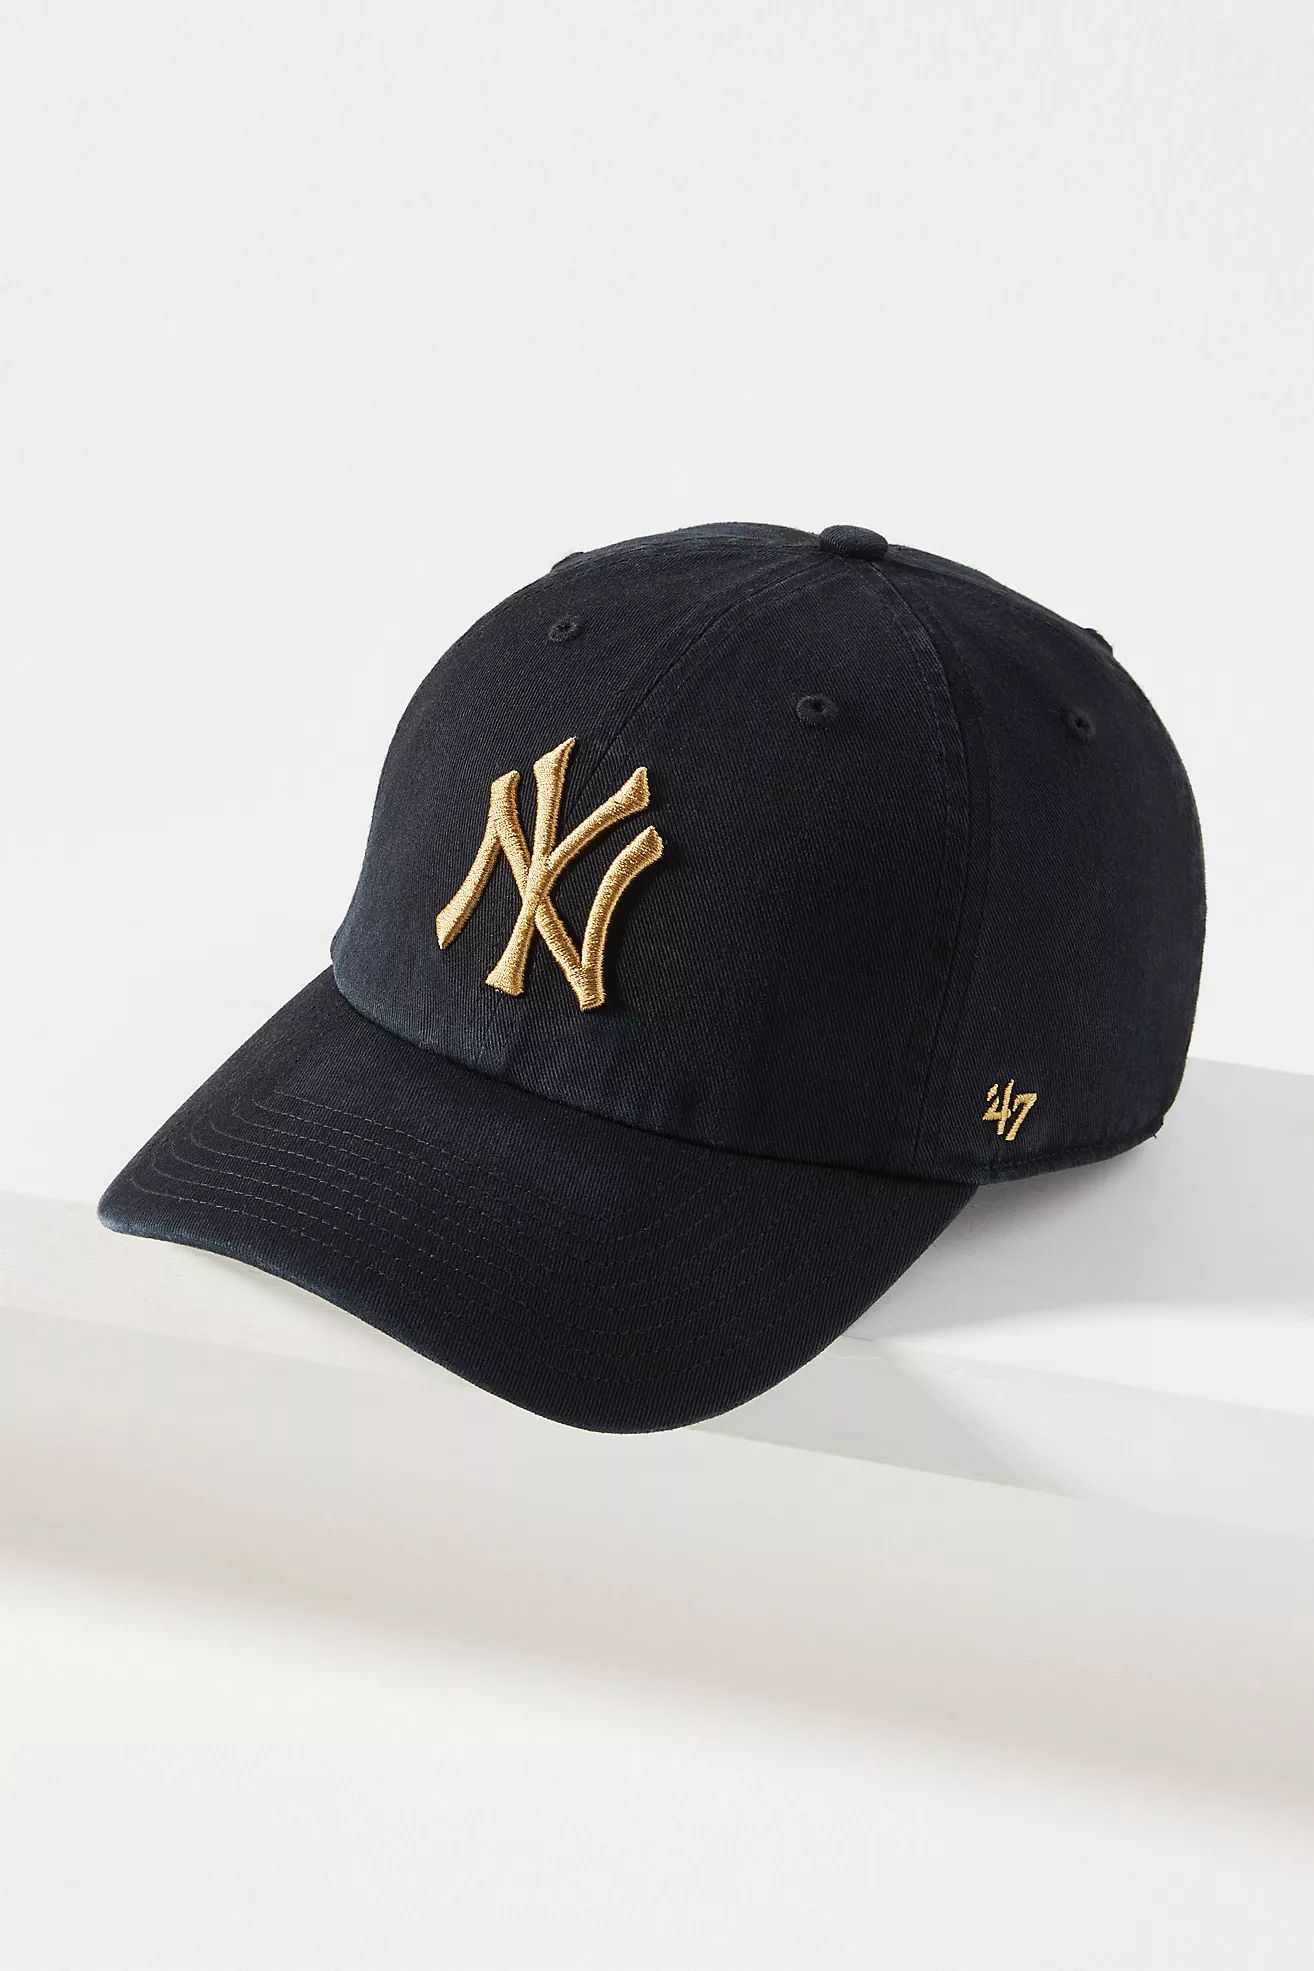 '47 NY Baseball Cap | Anthropologie (US)